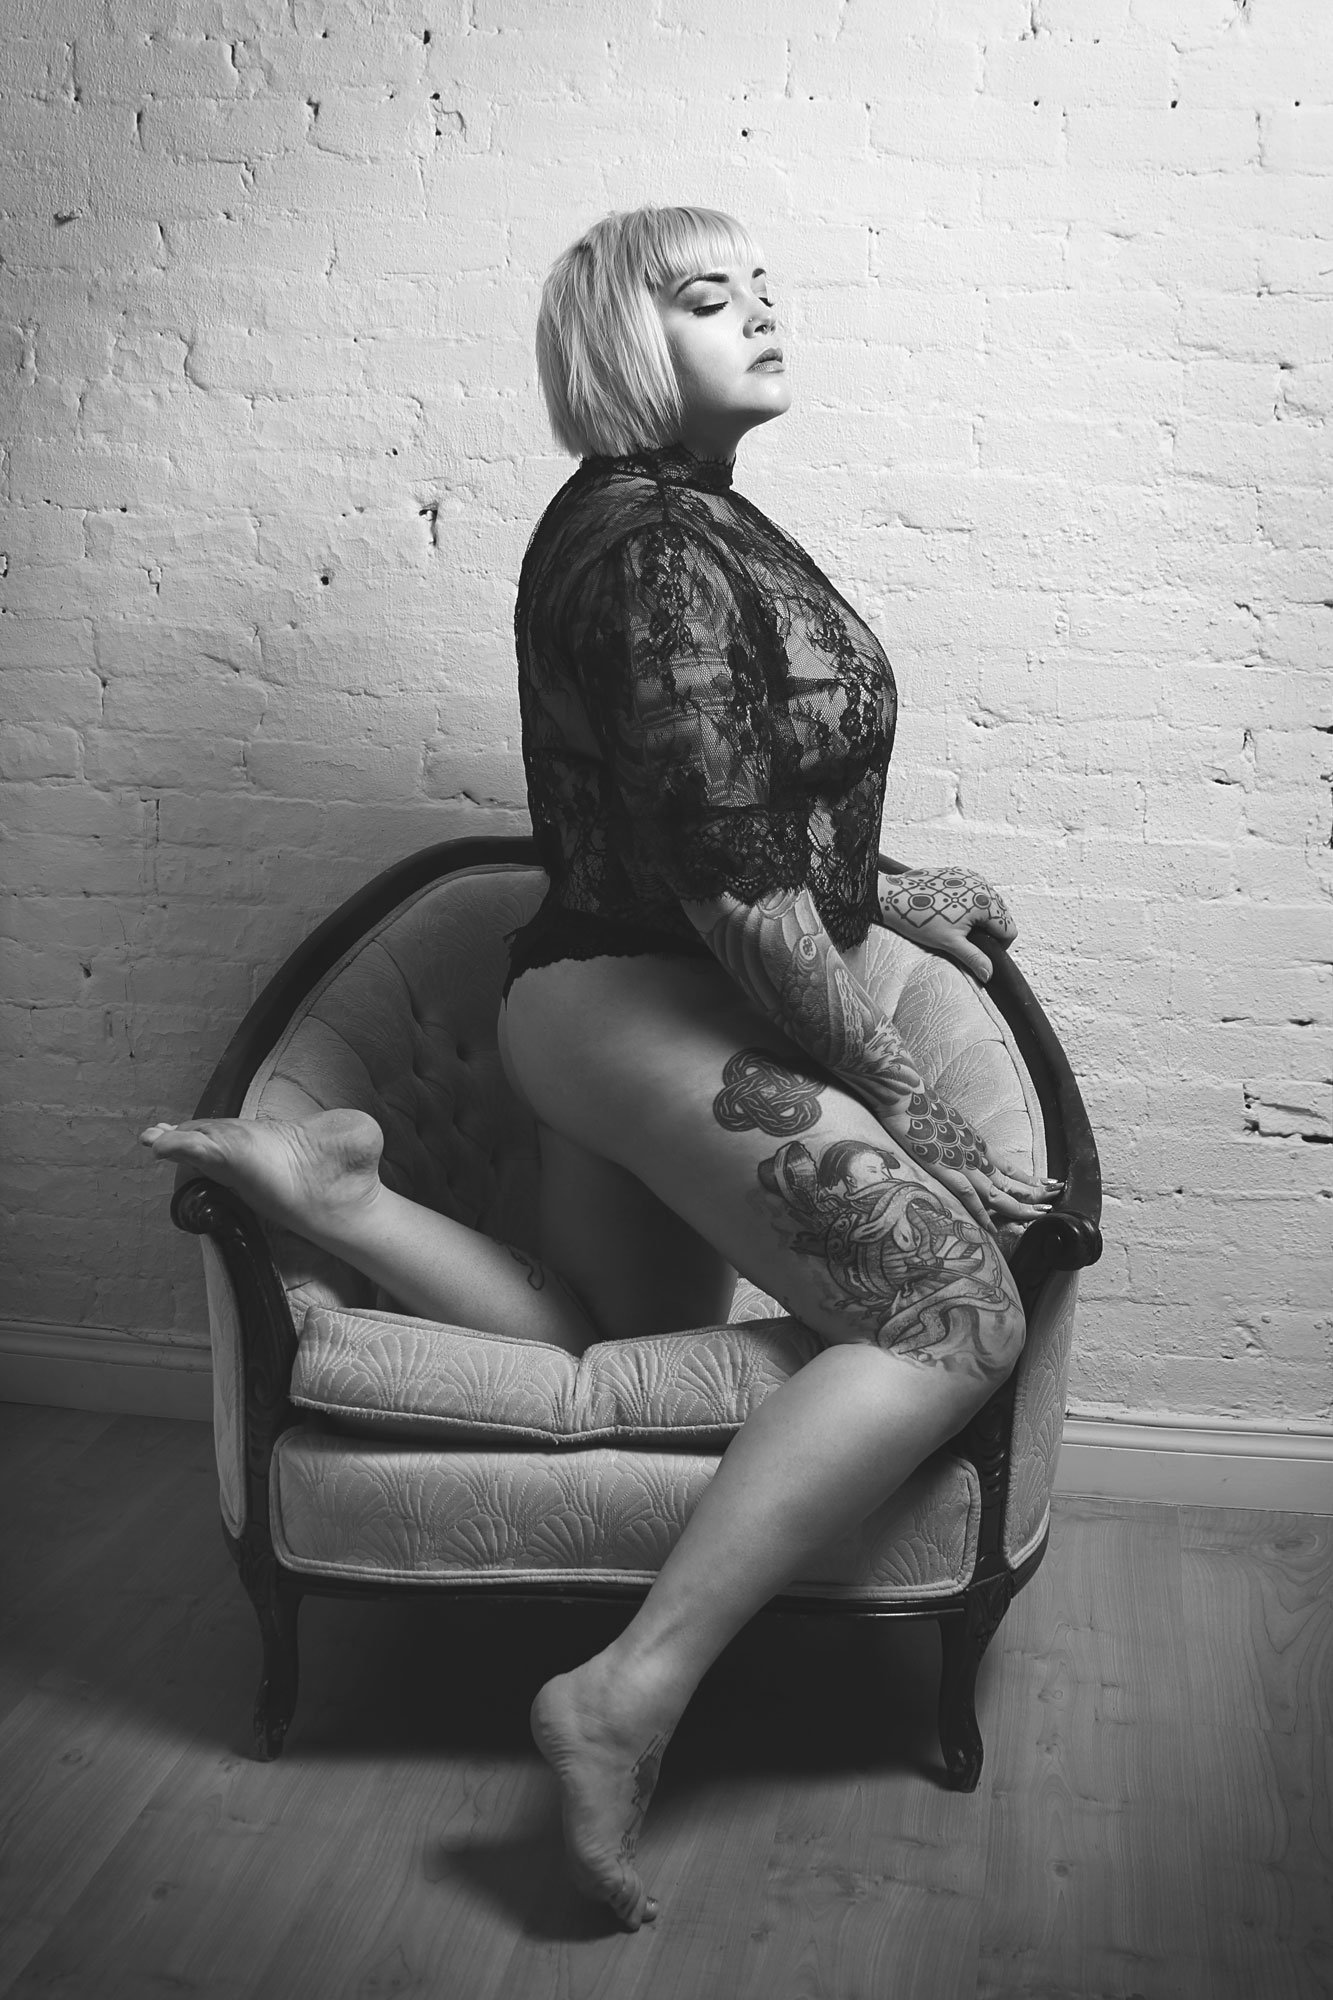 Chicago Female Escort for Women- Tattooed Escort Erin Black.